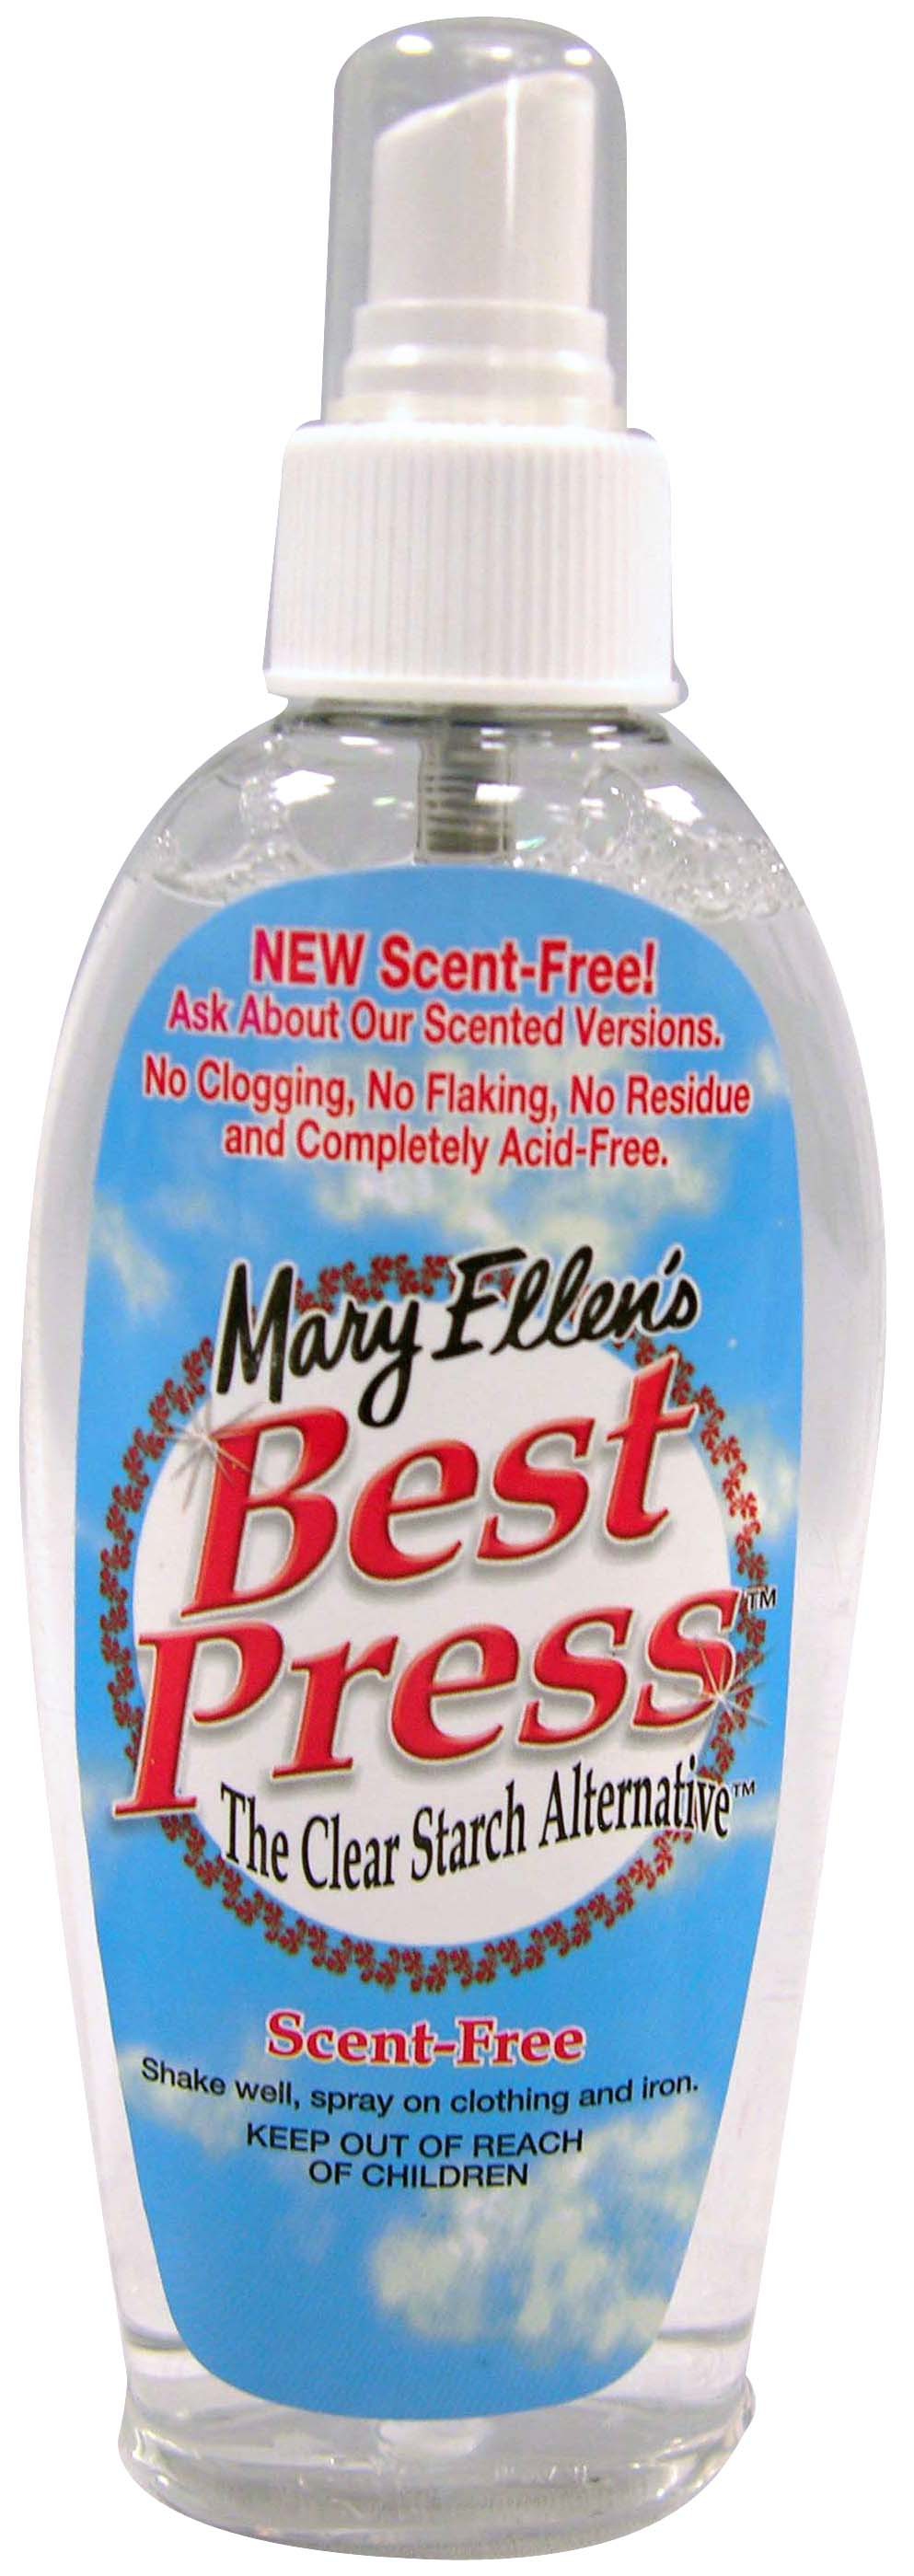 Mary Ellen's Best Press Clear Starch Alternative 16oz Scent-Free